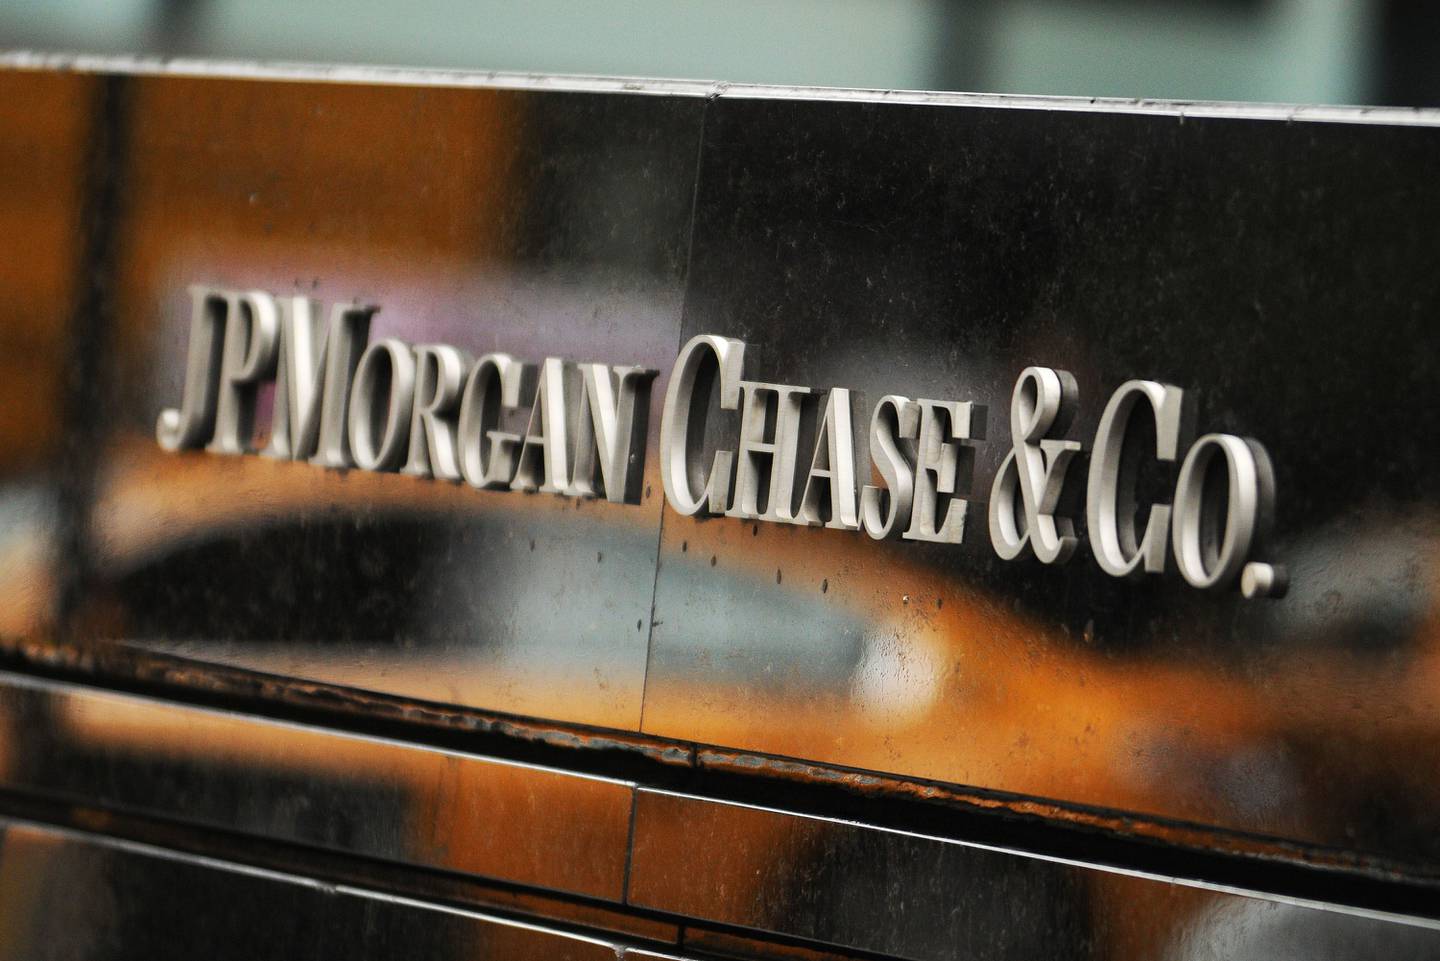 The JPMorgan Chase & Co. sign Photographer: Jonathan Fickies/Bloomberg